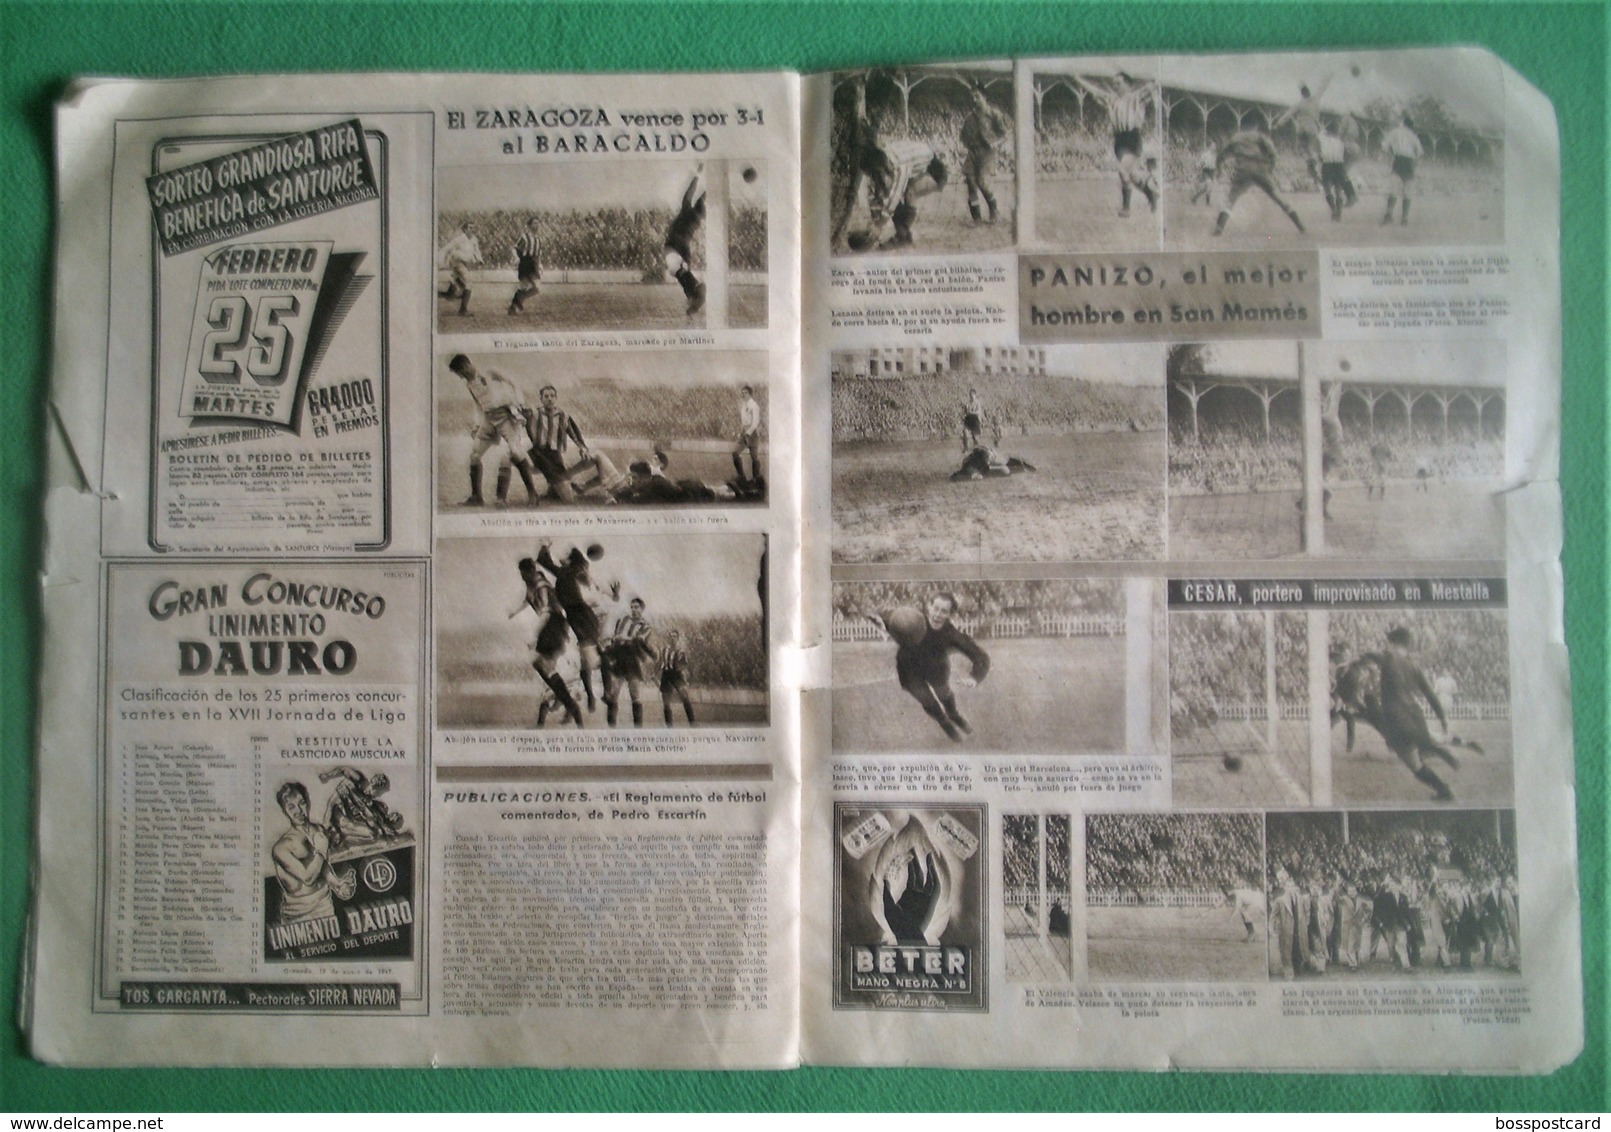 Madrid - Barcelona -  España - Periódico A Marca de 1947 - Fútbol - Football - Estadio - Stadium